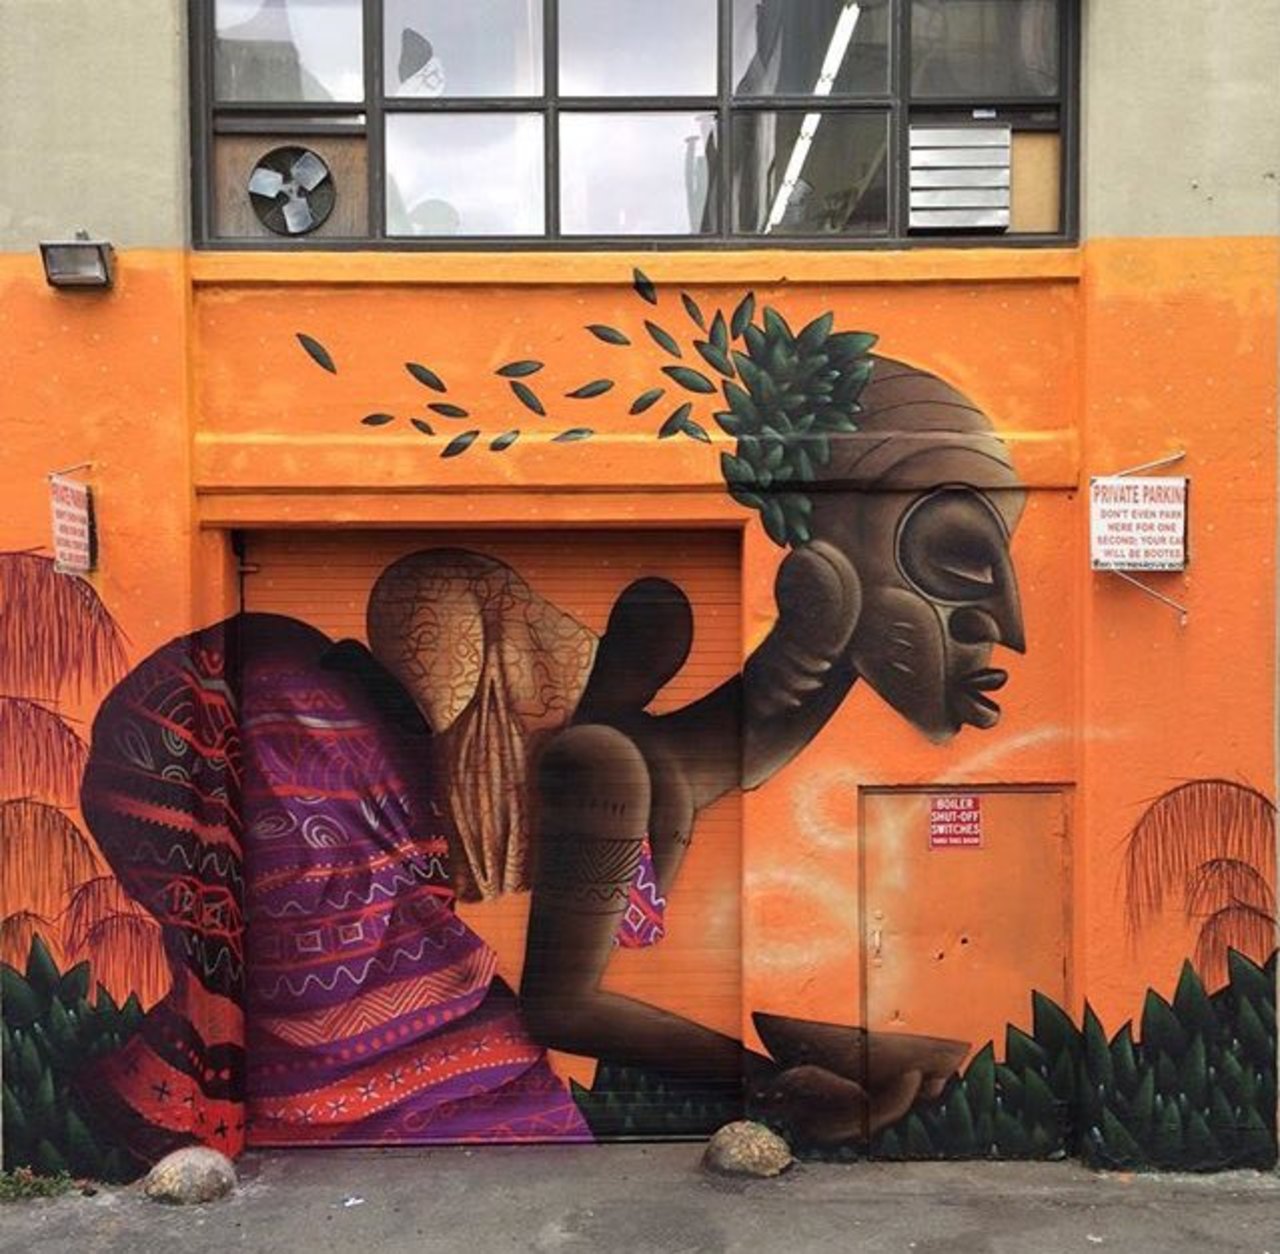 RT @5weekstogo: New Street Art by Alexandre Keto in NYC 

#art #graffiti #mural #streetart https://t.co/QhPPug0ixD